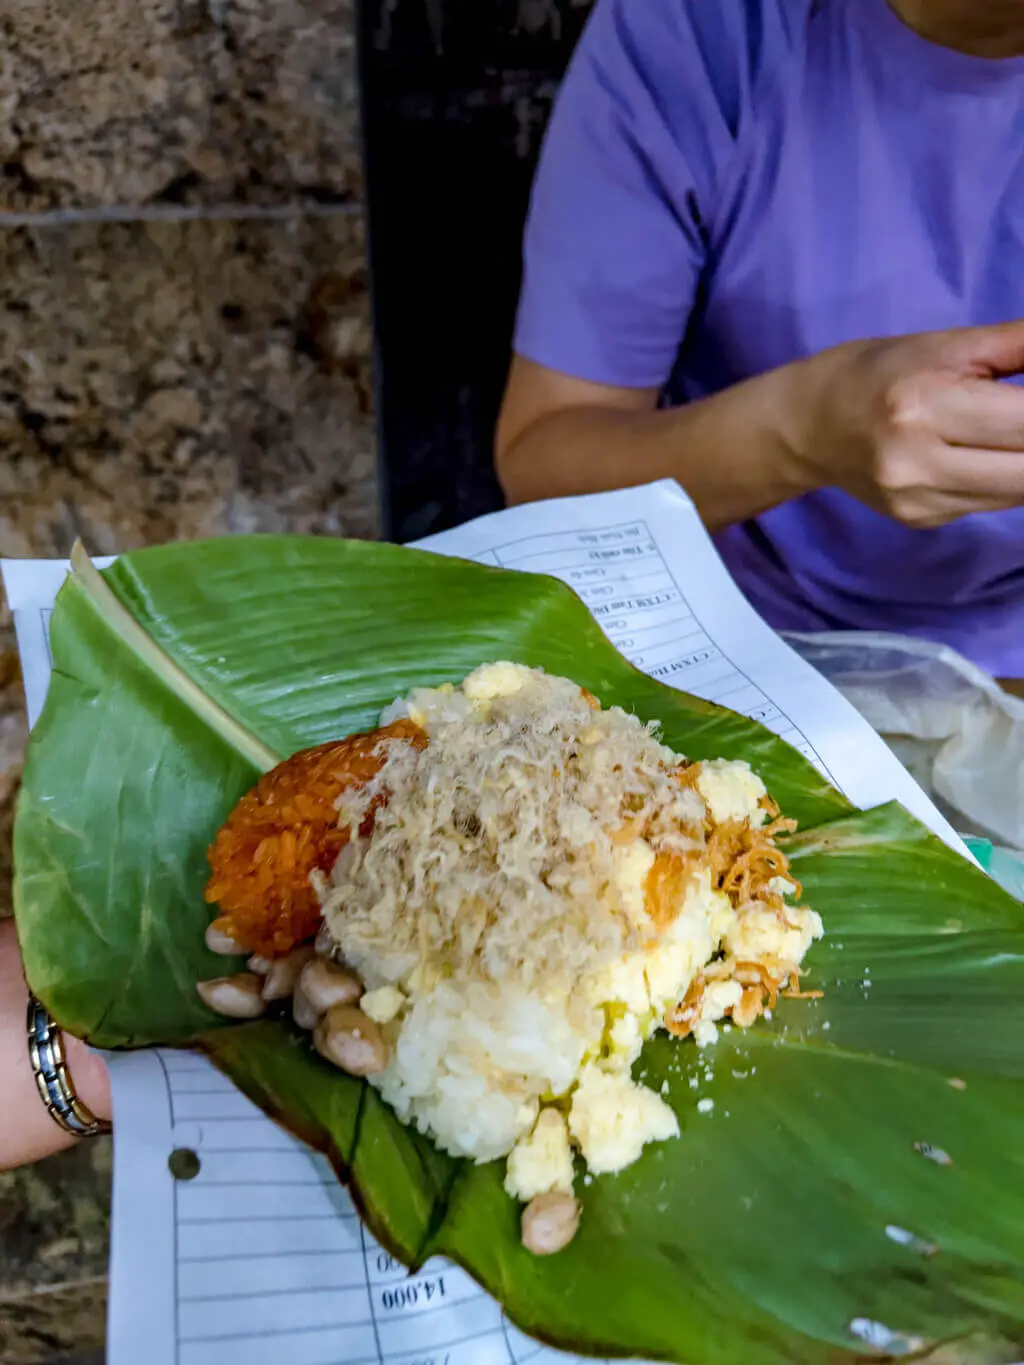 xoi sticky rice breakfast at local market a chef's tour Hanoi Vietnam - laugh travel eat